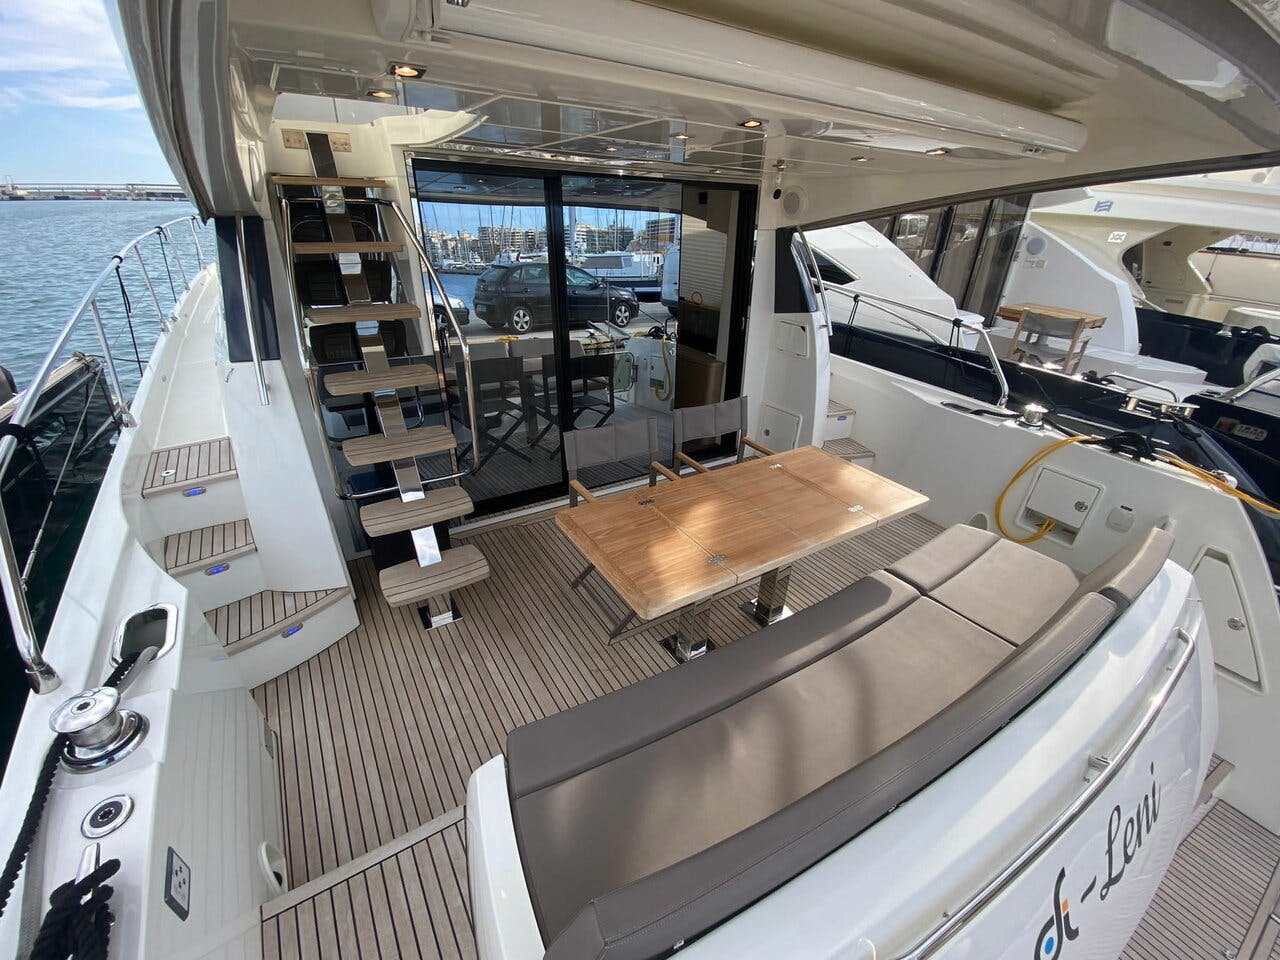 Book Prestige 560F Motor yacht for bareboat charter in Palma de Mallorca, Balearic Islands, Spain with TripYacht!, picture 7